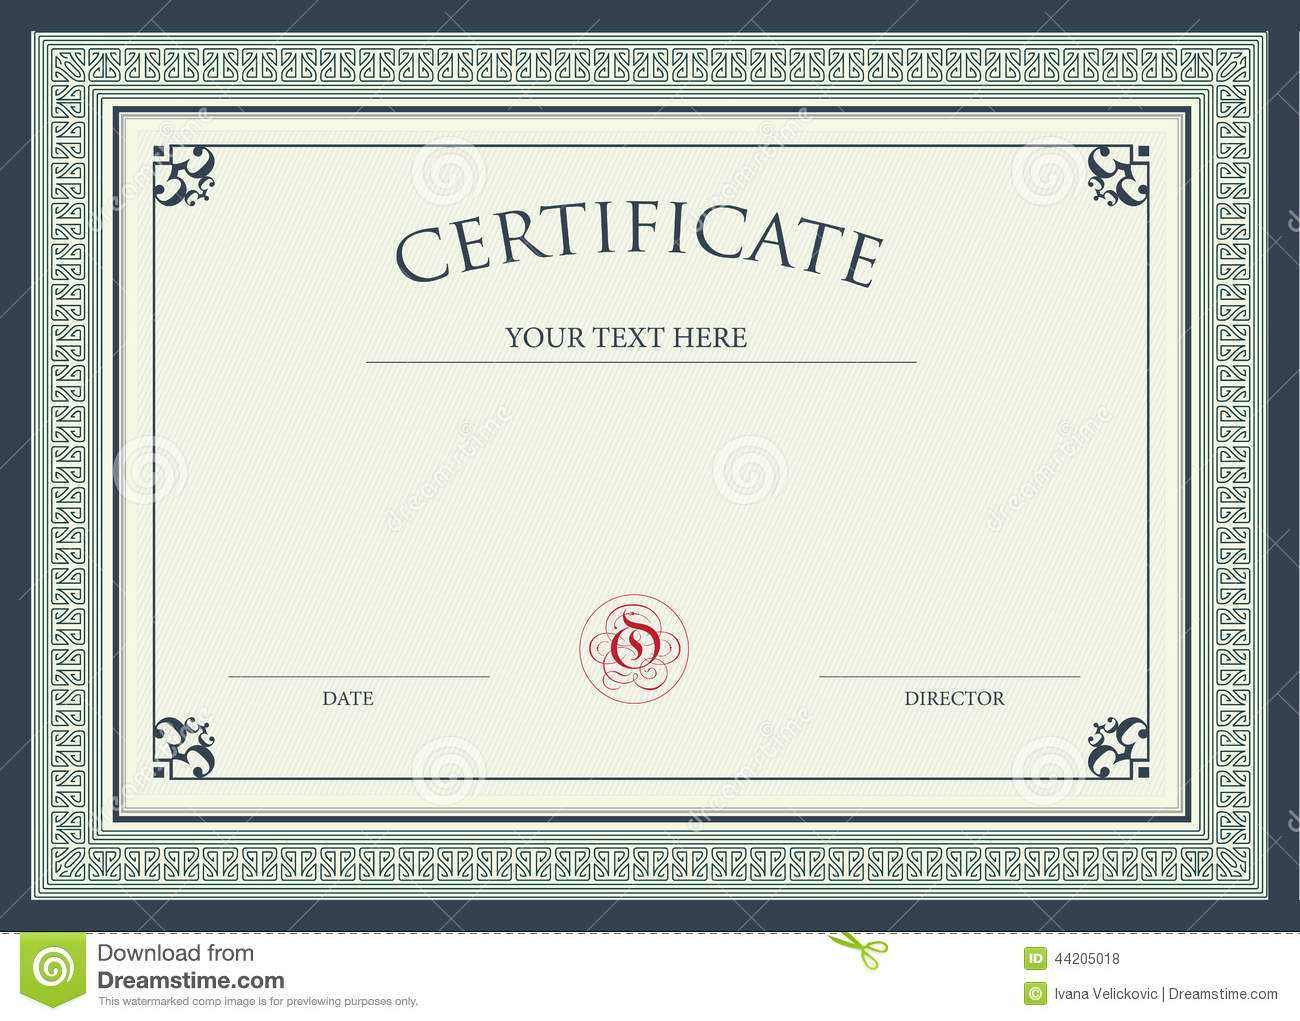 Certificate Of Award Stock Illustration. Illustration Of With Felicitation Certificate Template